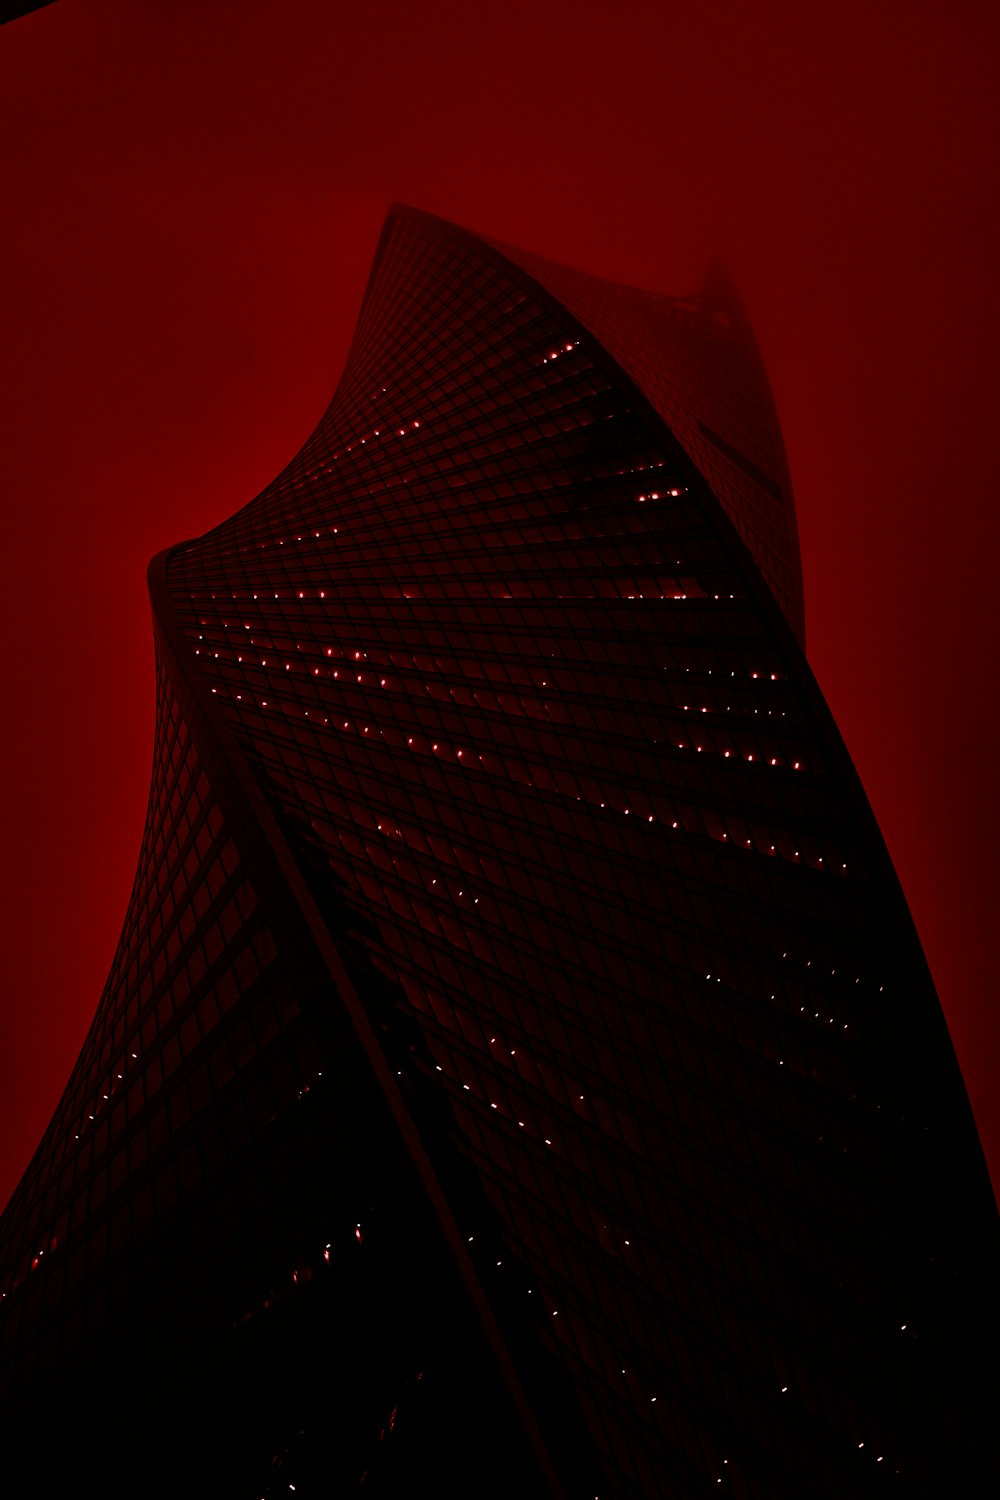 red and black umbrella illustration